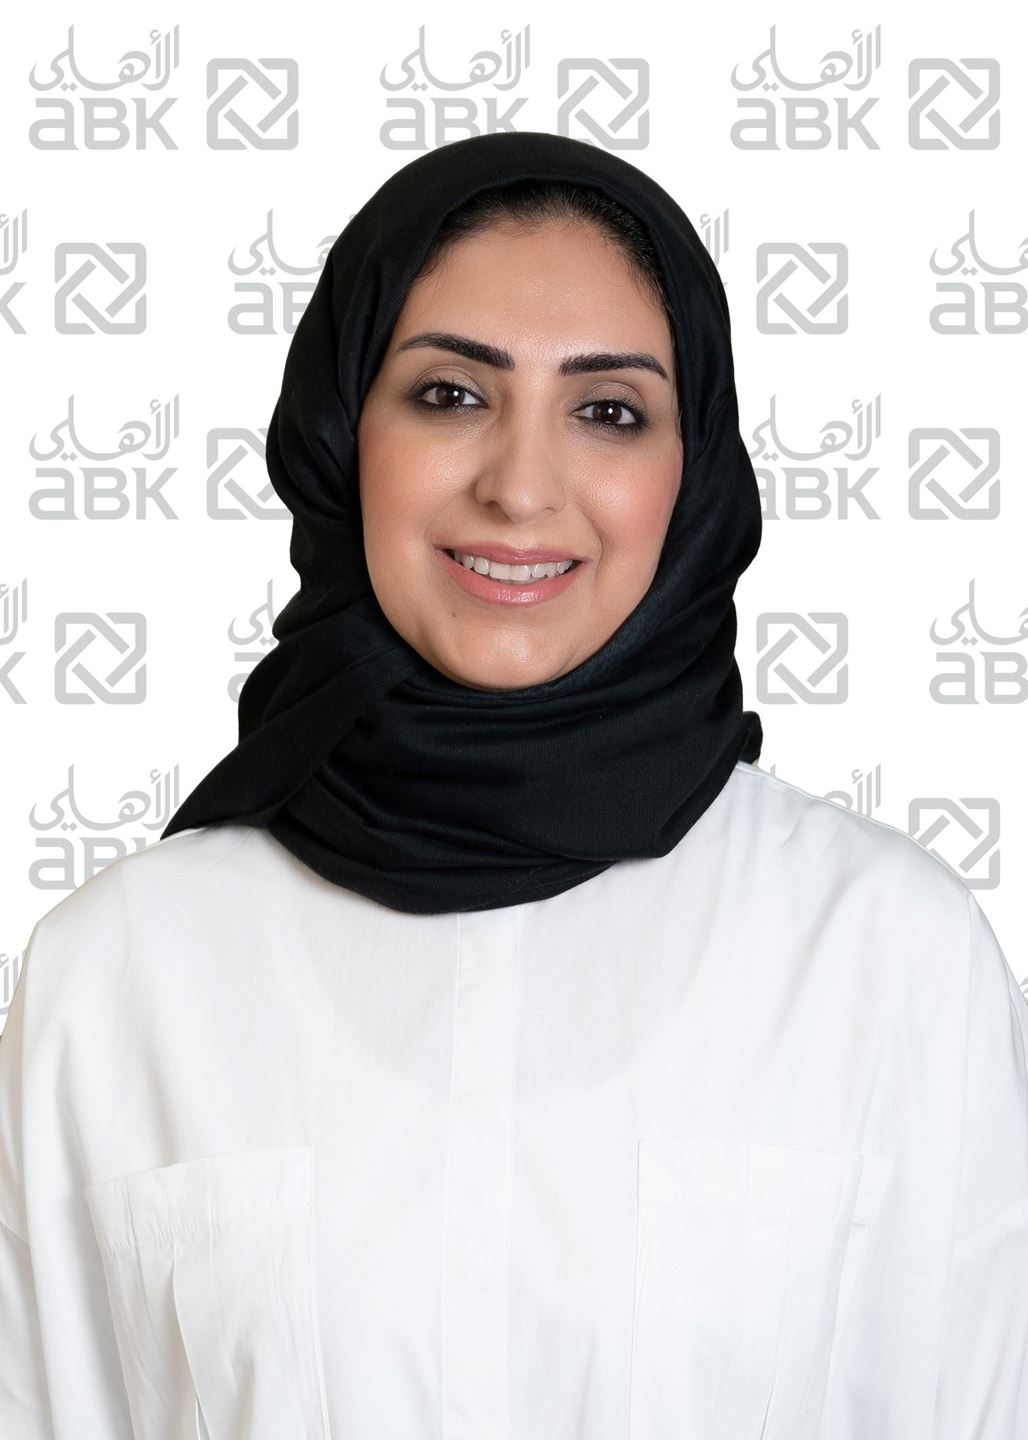 Ms. Johair Marafi, Acting General Manager of Retail Banking at ABK